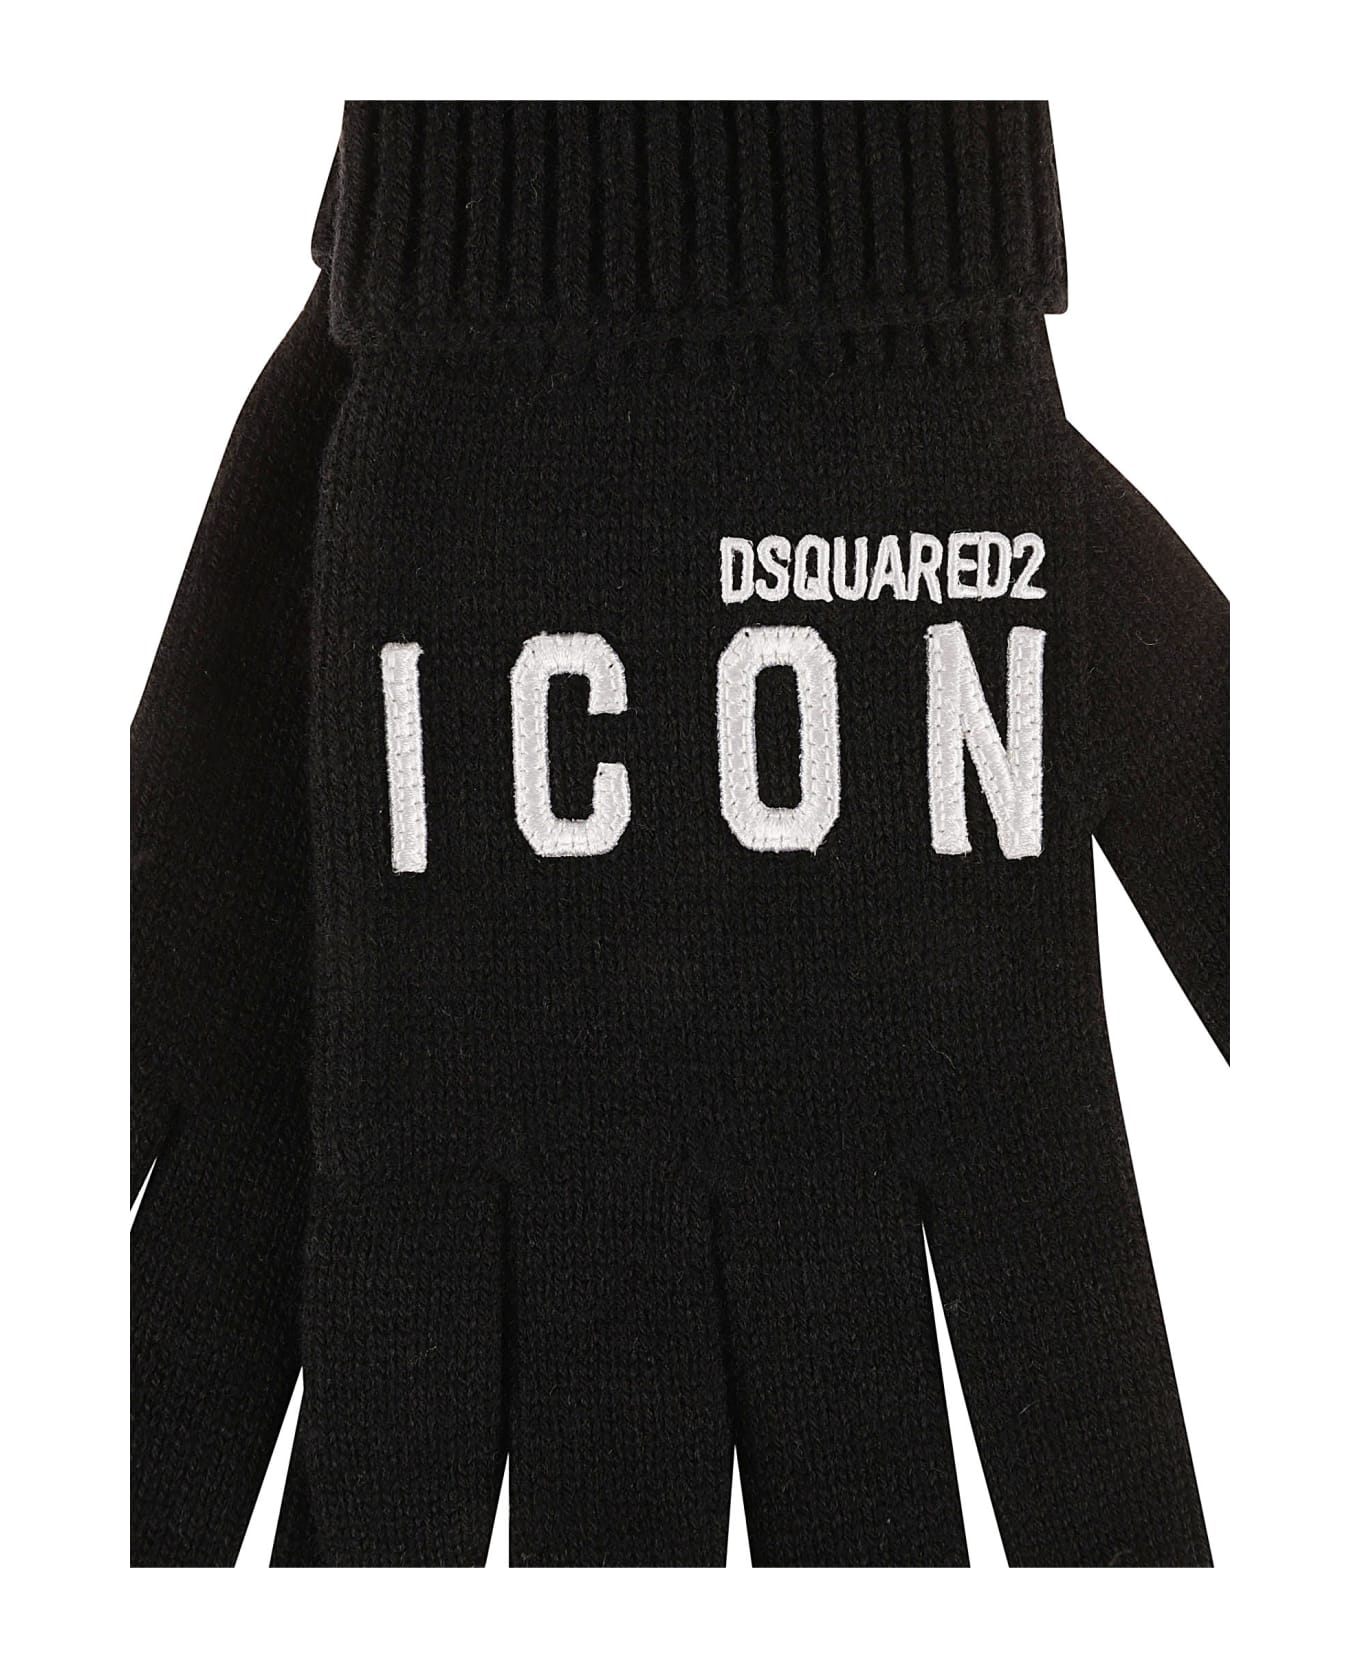 Dsquared2 Icon Gloves - Black/White